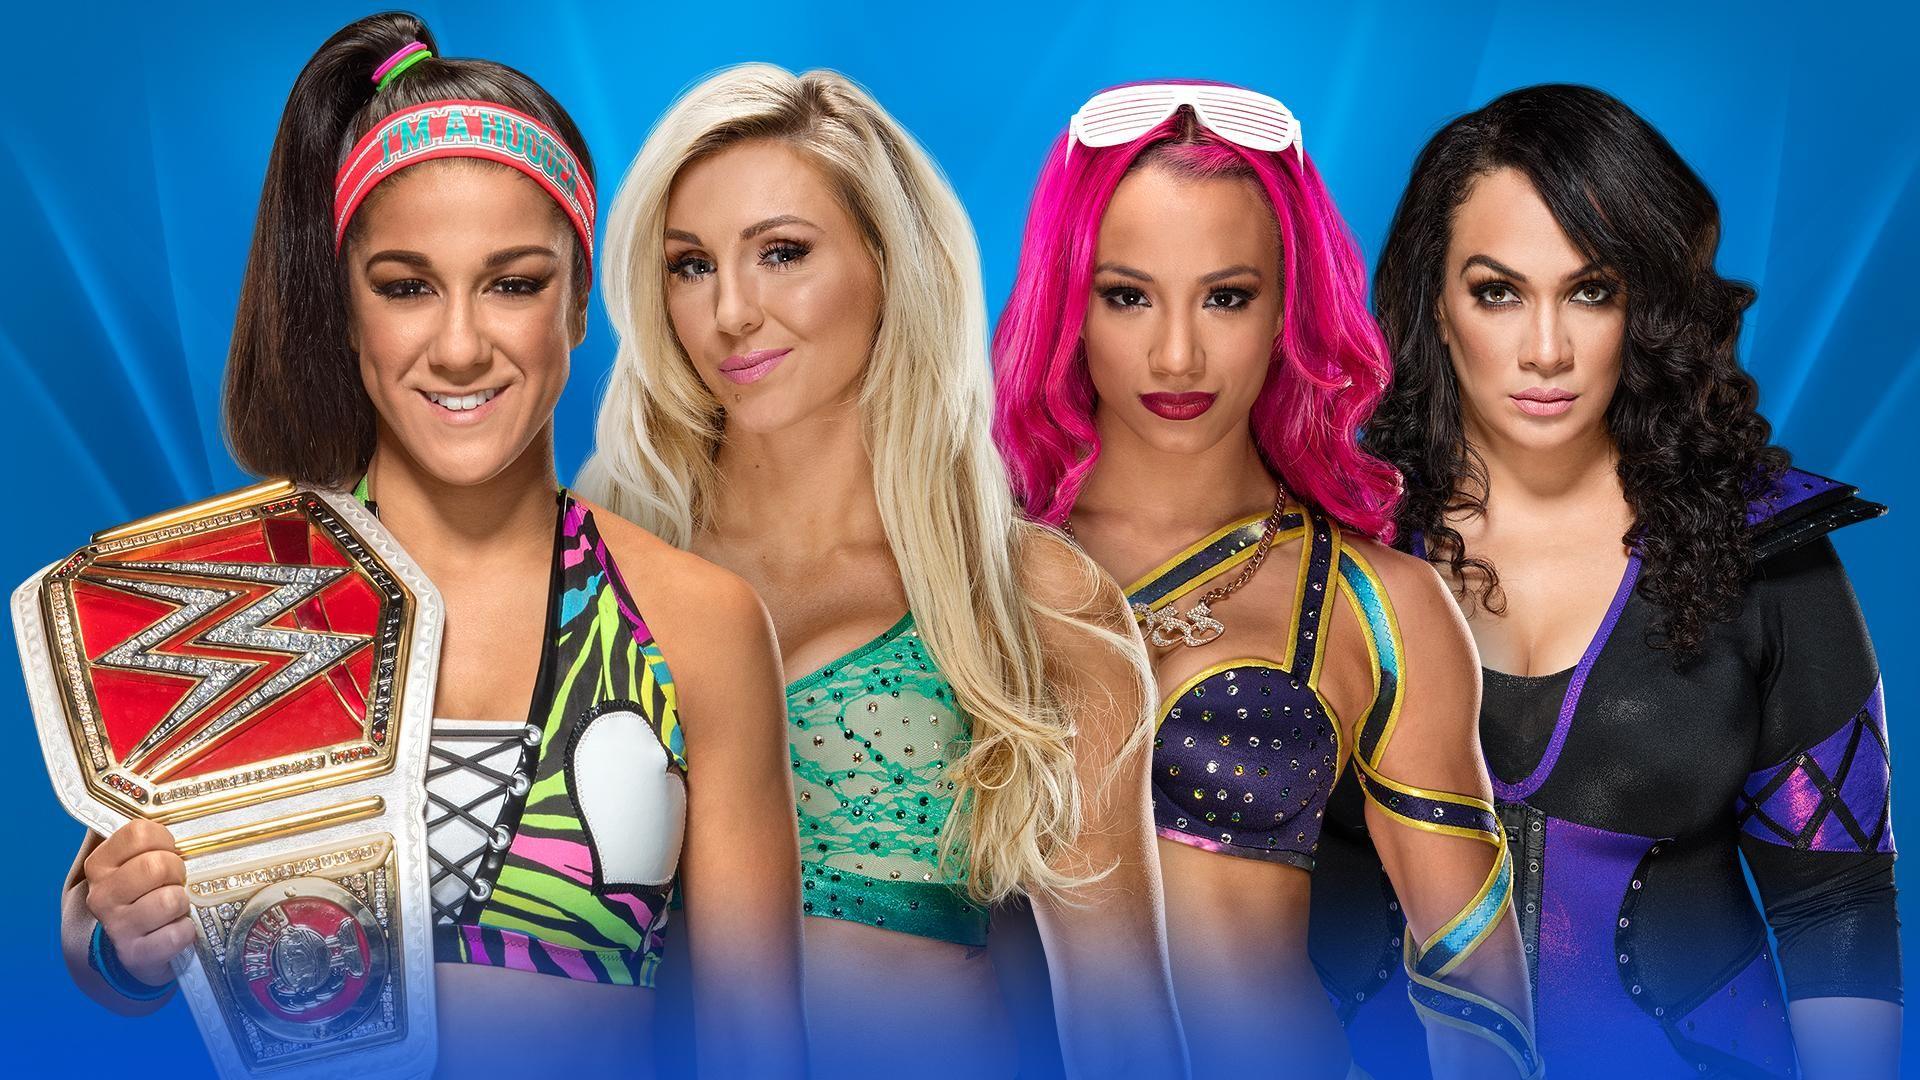 WWE WrestleMania 33 preview: Charlotte vs Sasha Banks vs Bayley vs